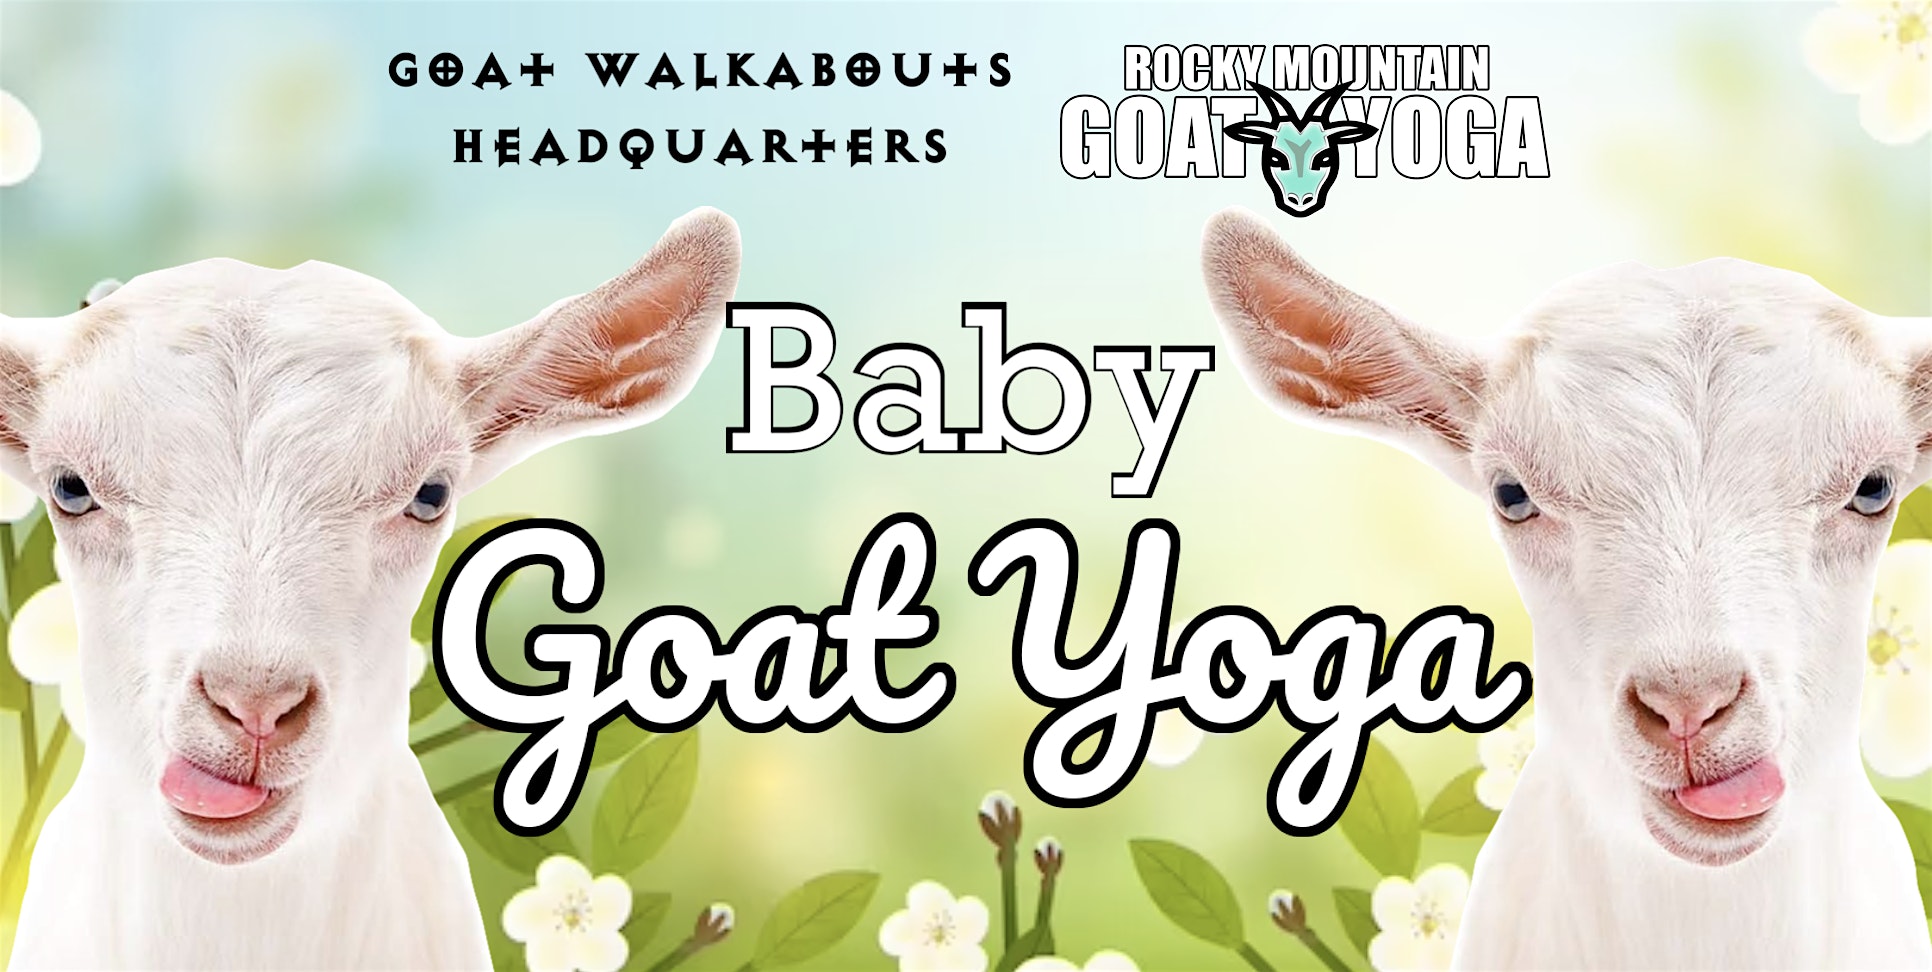 Baby Goat Yoga - June 1st (GOAT WALKABOUTS HEADQUARTERS)